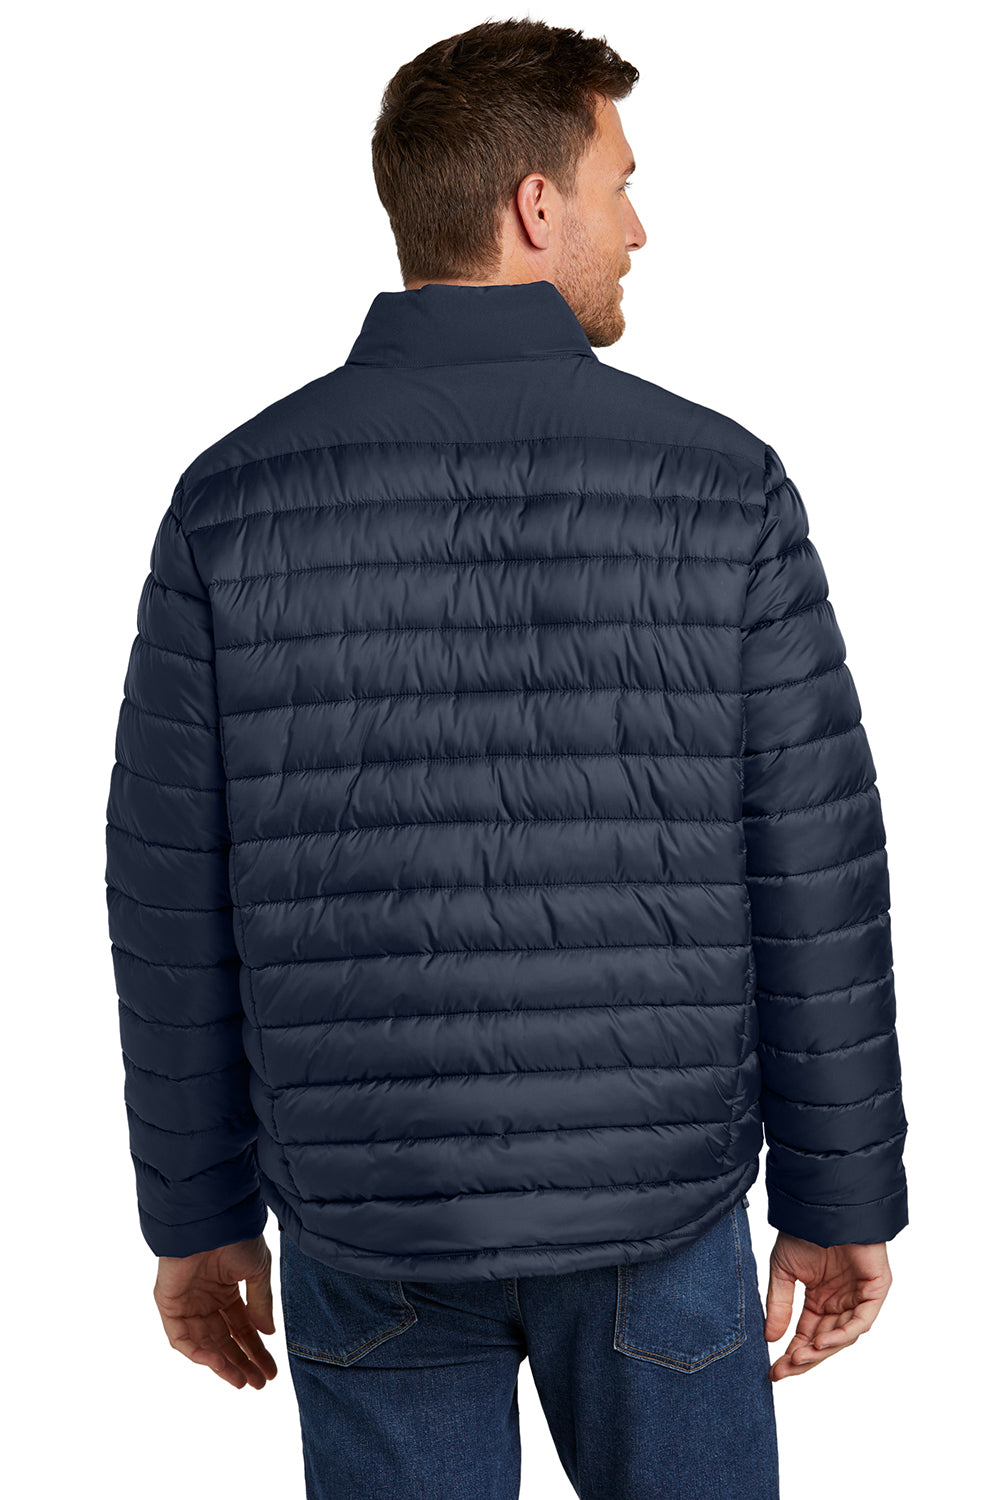 Port Authority J364 Mens Horizon Full Zip Puffy Jacket Dress Navy Blue Back